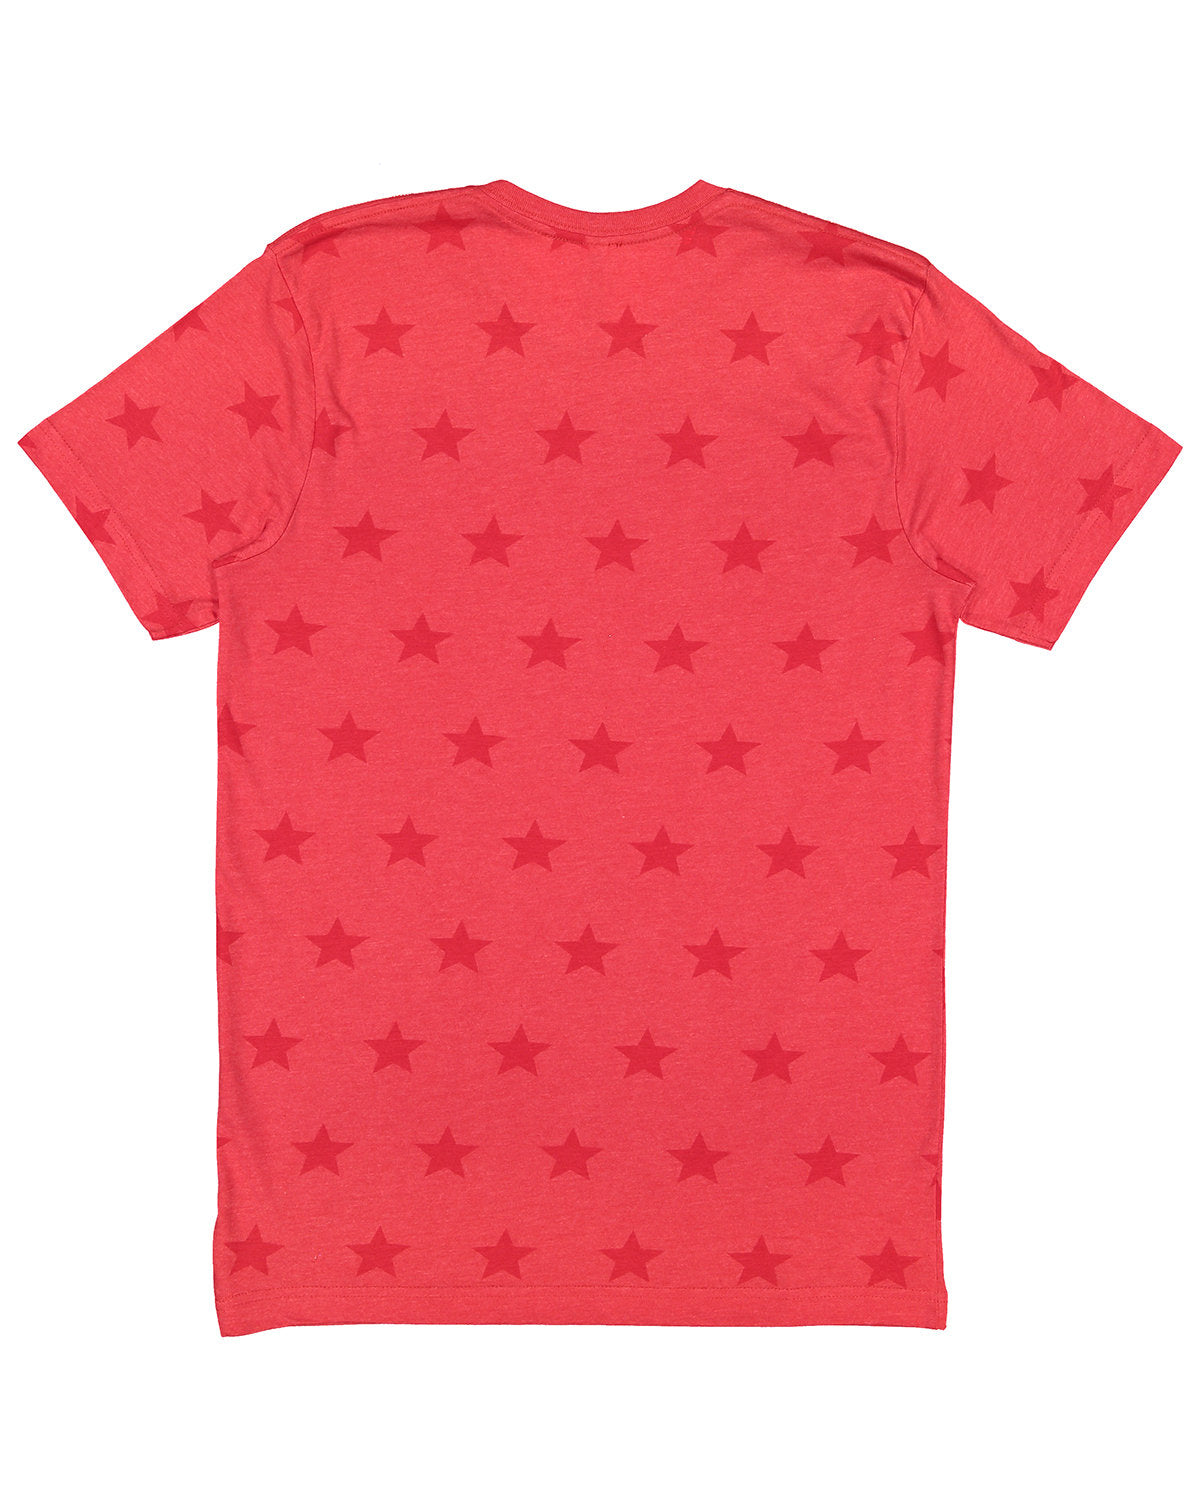 Code Five 3929 Mens' Five Star T-Shirt